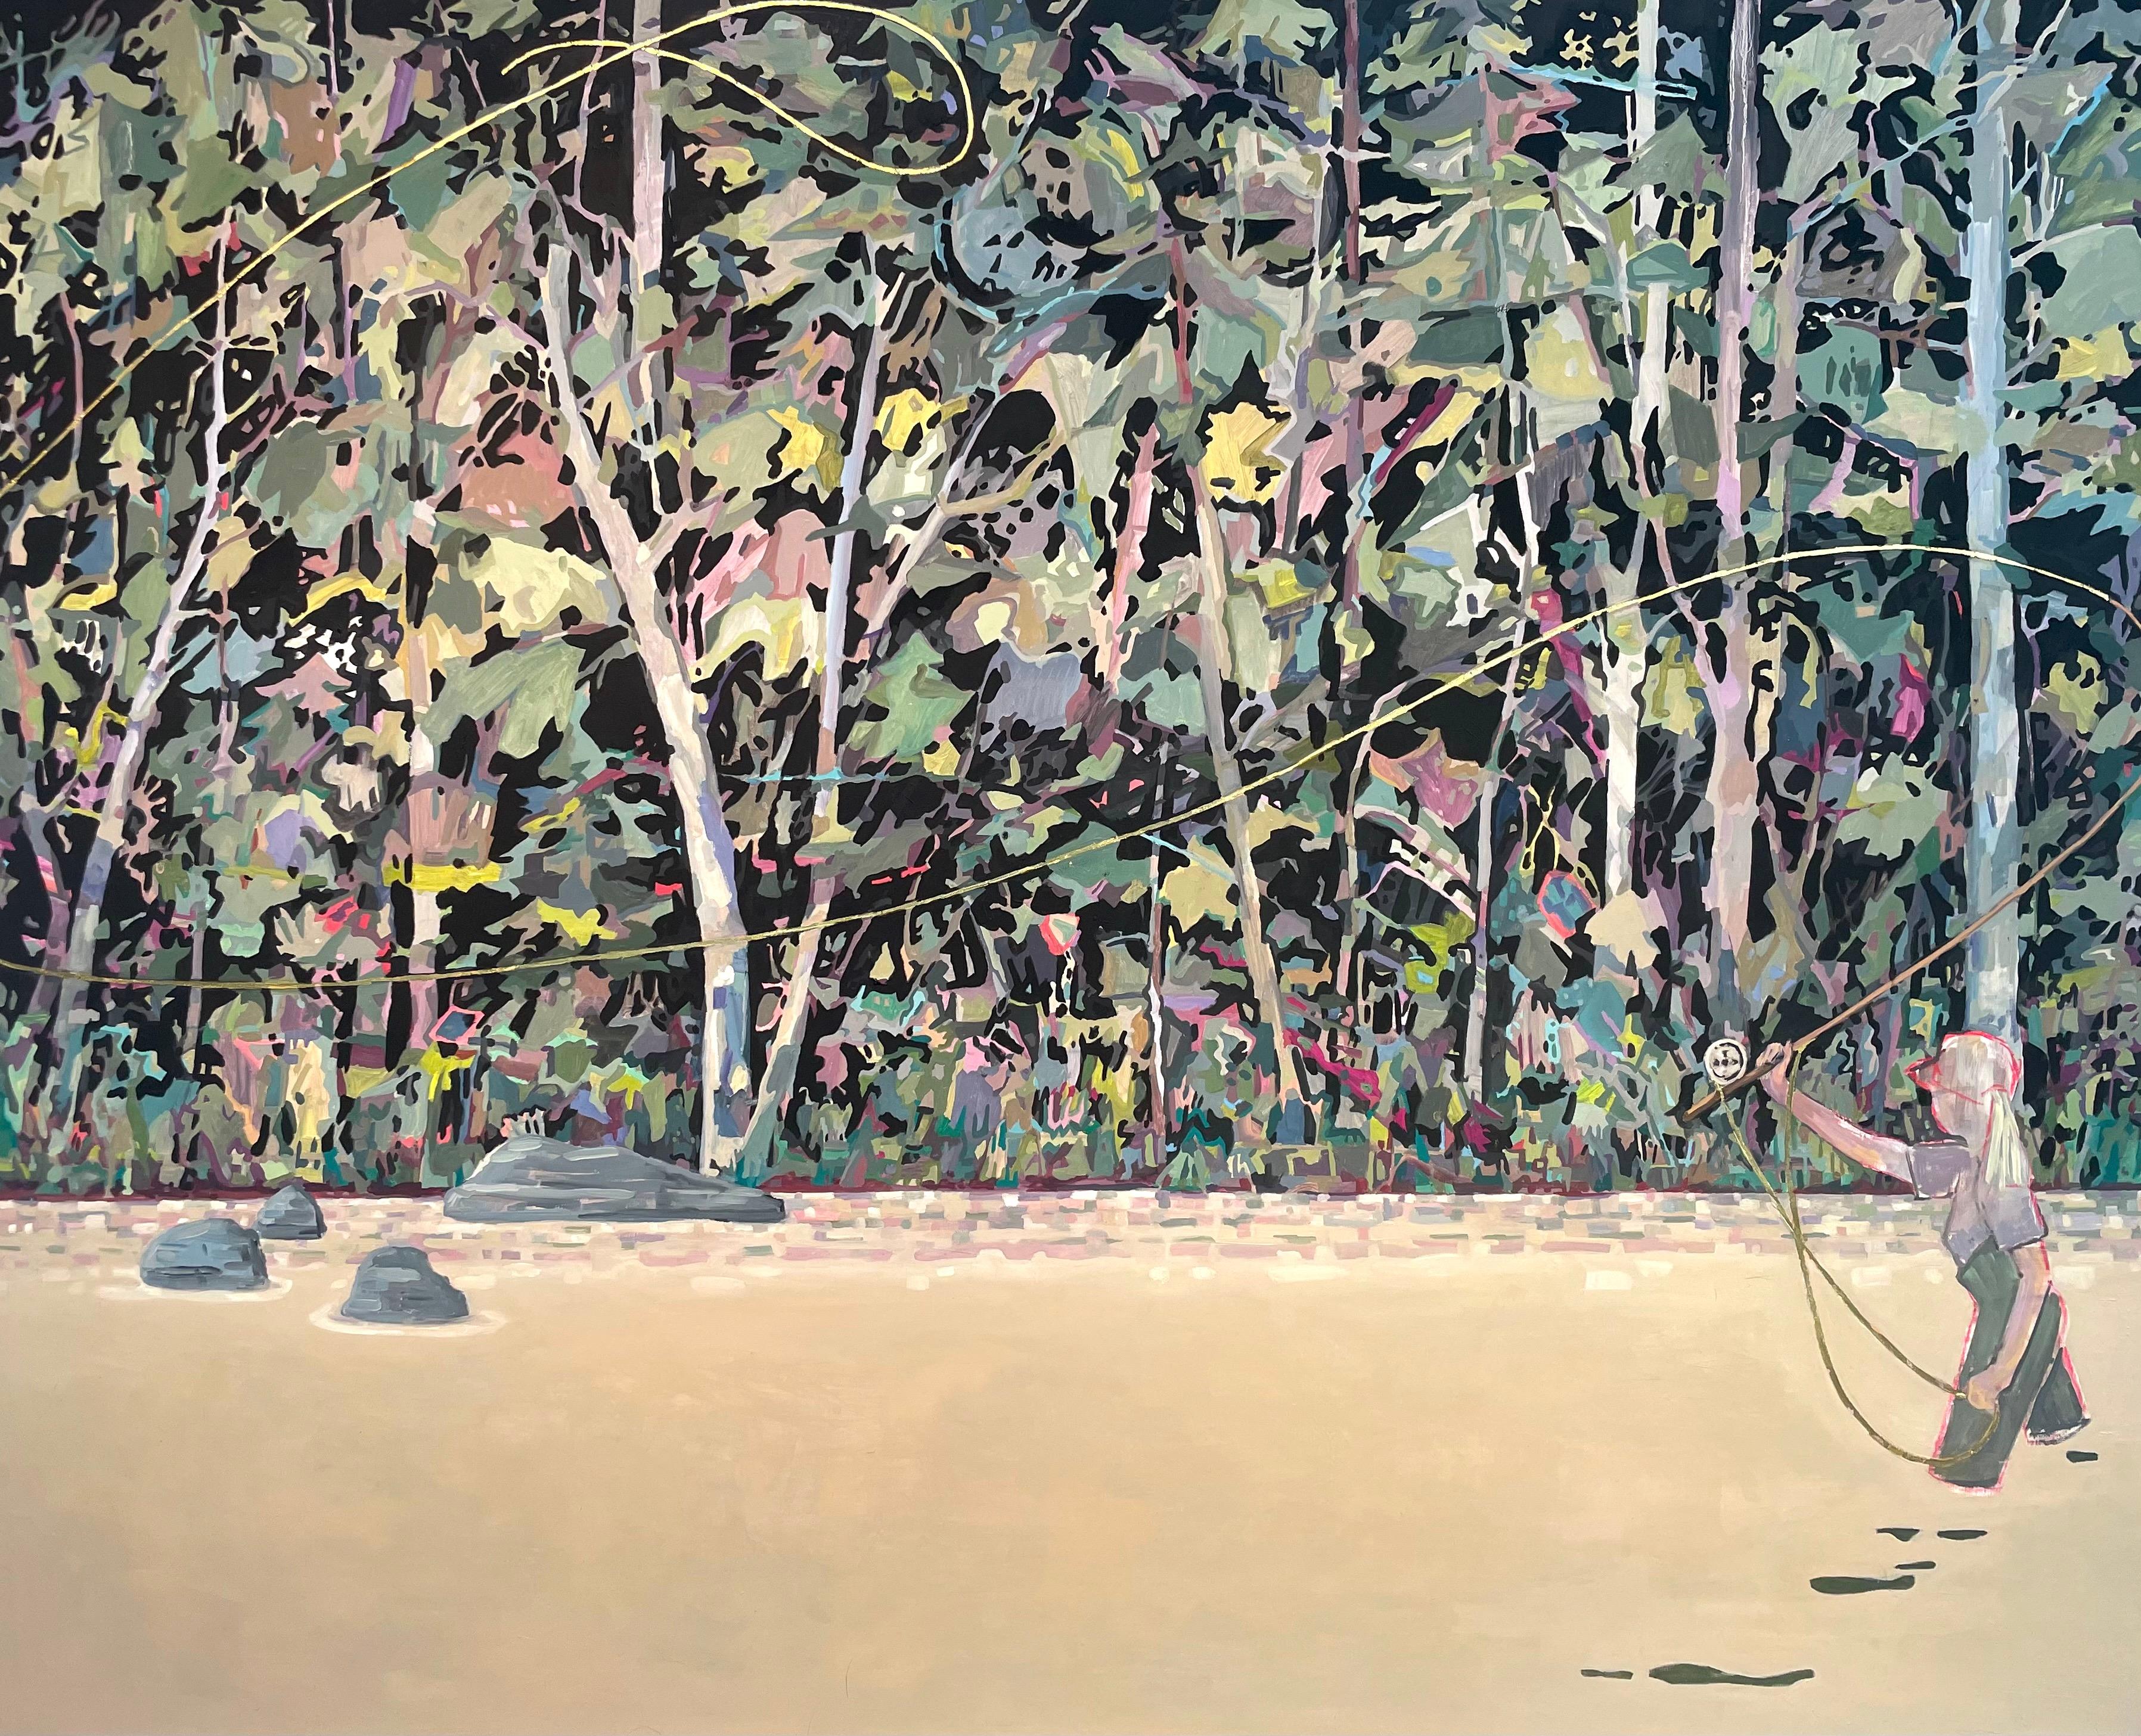 KK Kozik Landscape Painting - White River, Lake Landscape, Figure Fishing in Olive Yellow Water, Beige, Green